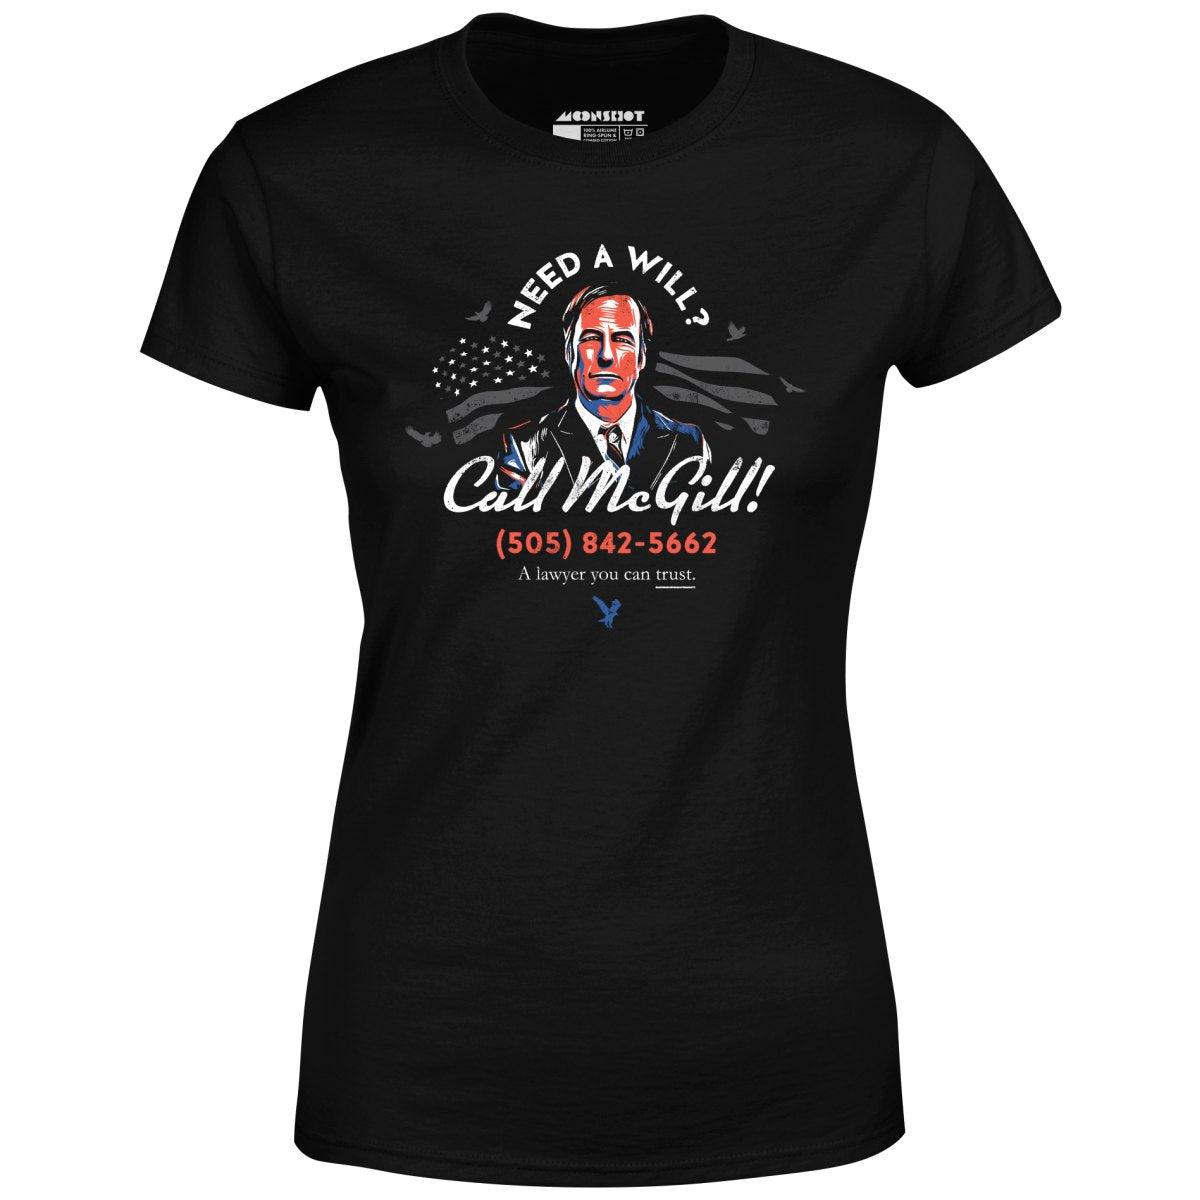 Need a Will? Call McGill - Women's T-Shirt